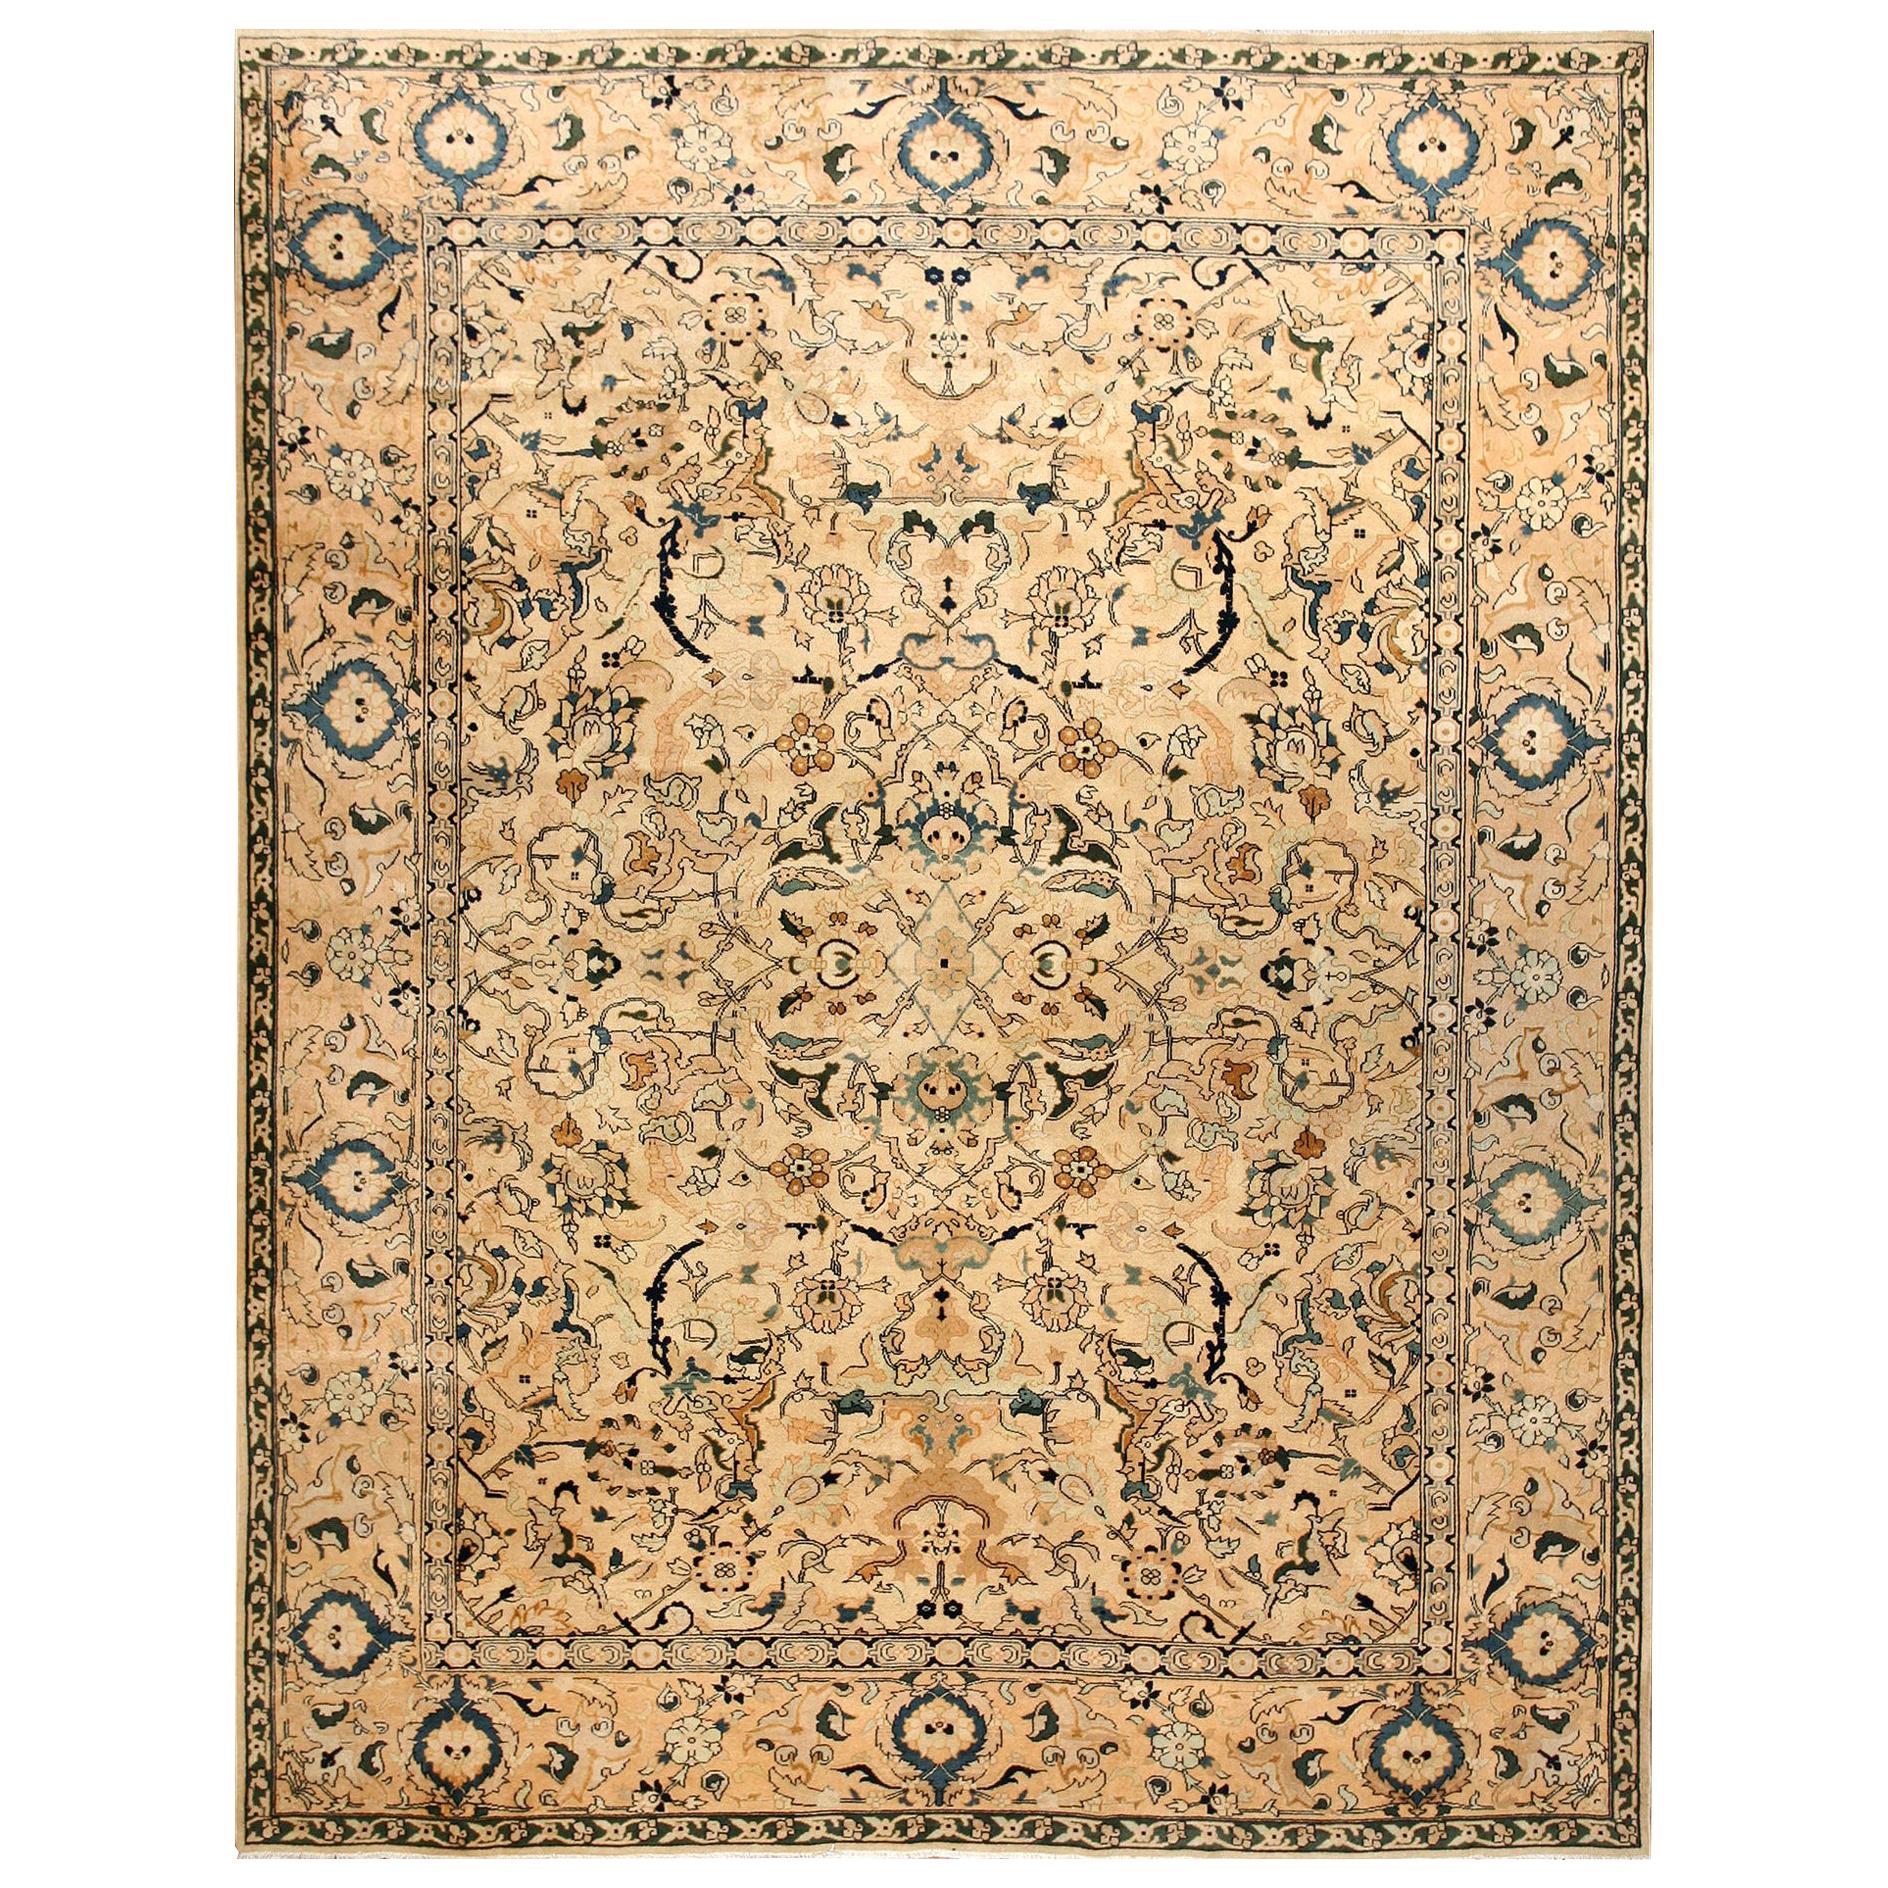 Early 20th Century N.W. Persian Tabriz Carpet ( 9' x 11'6" - 275 x 350 )